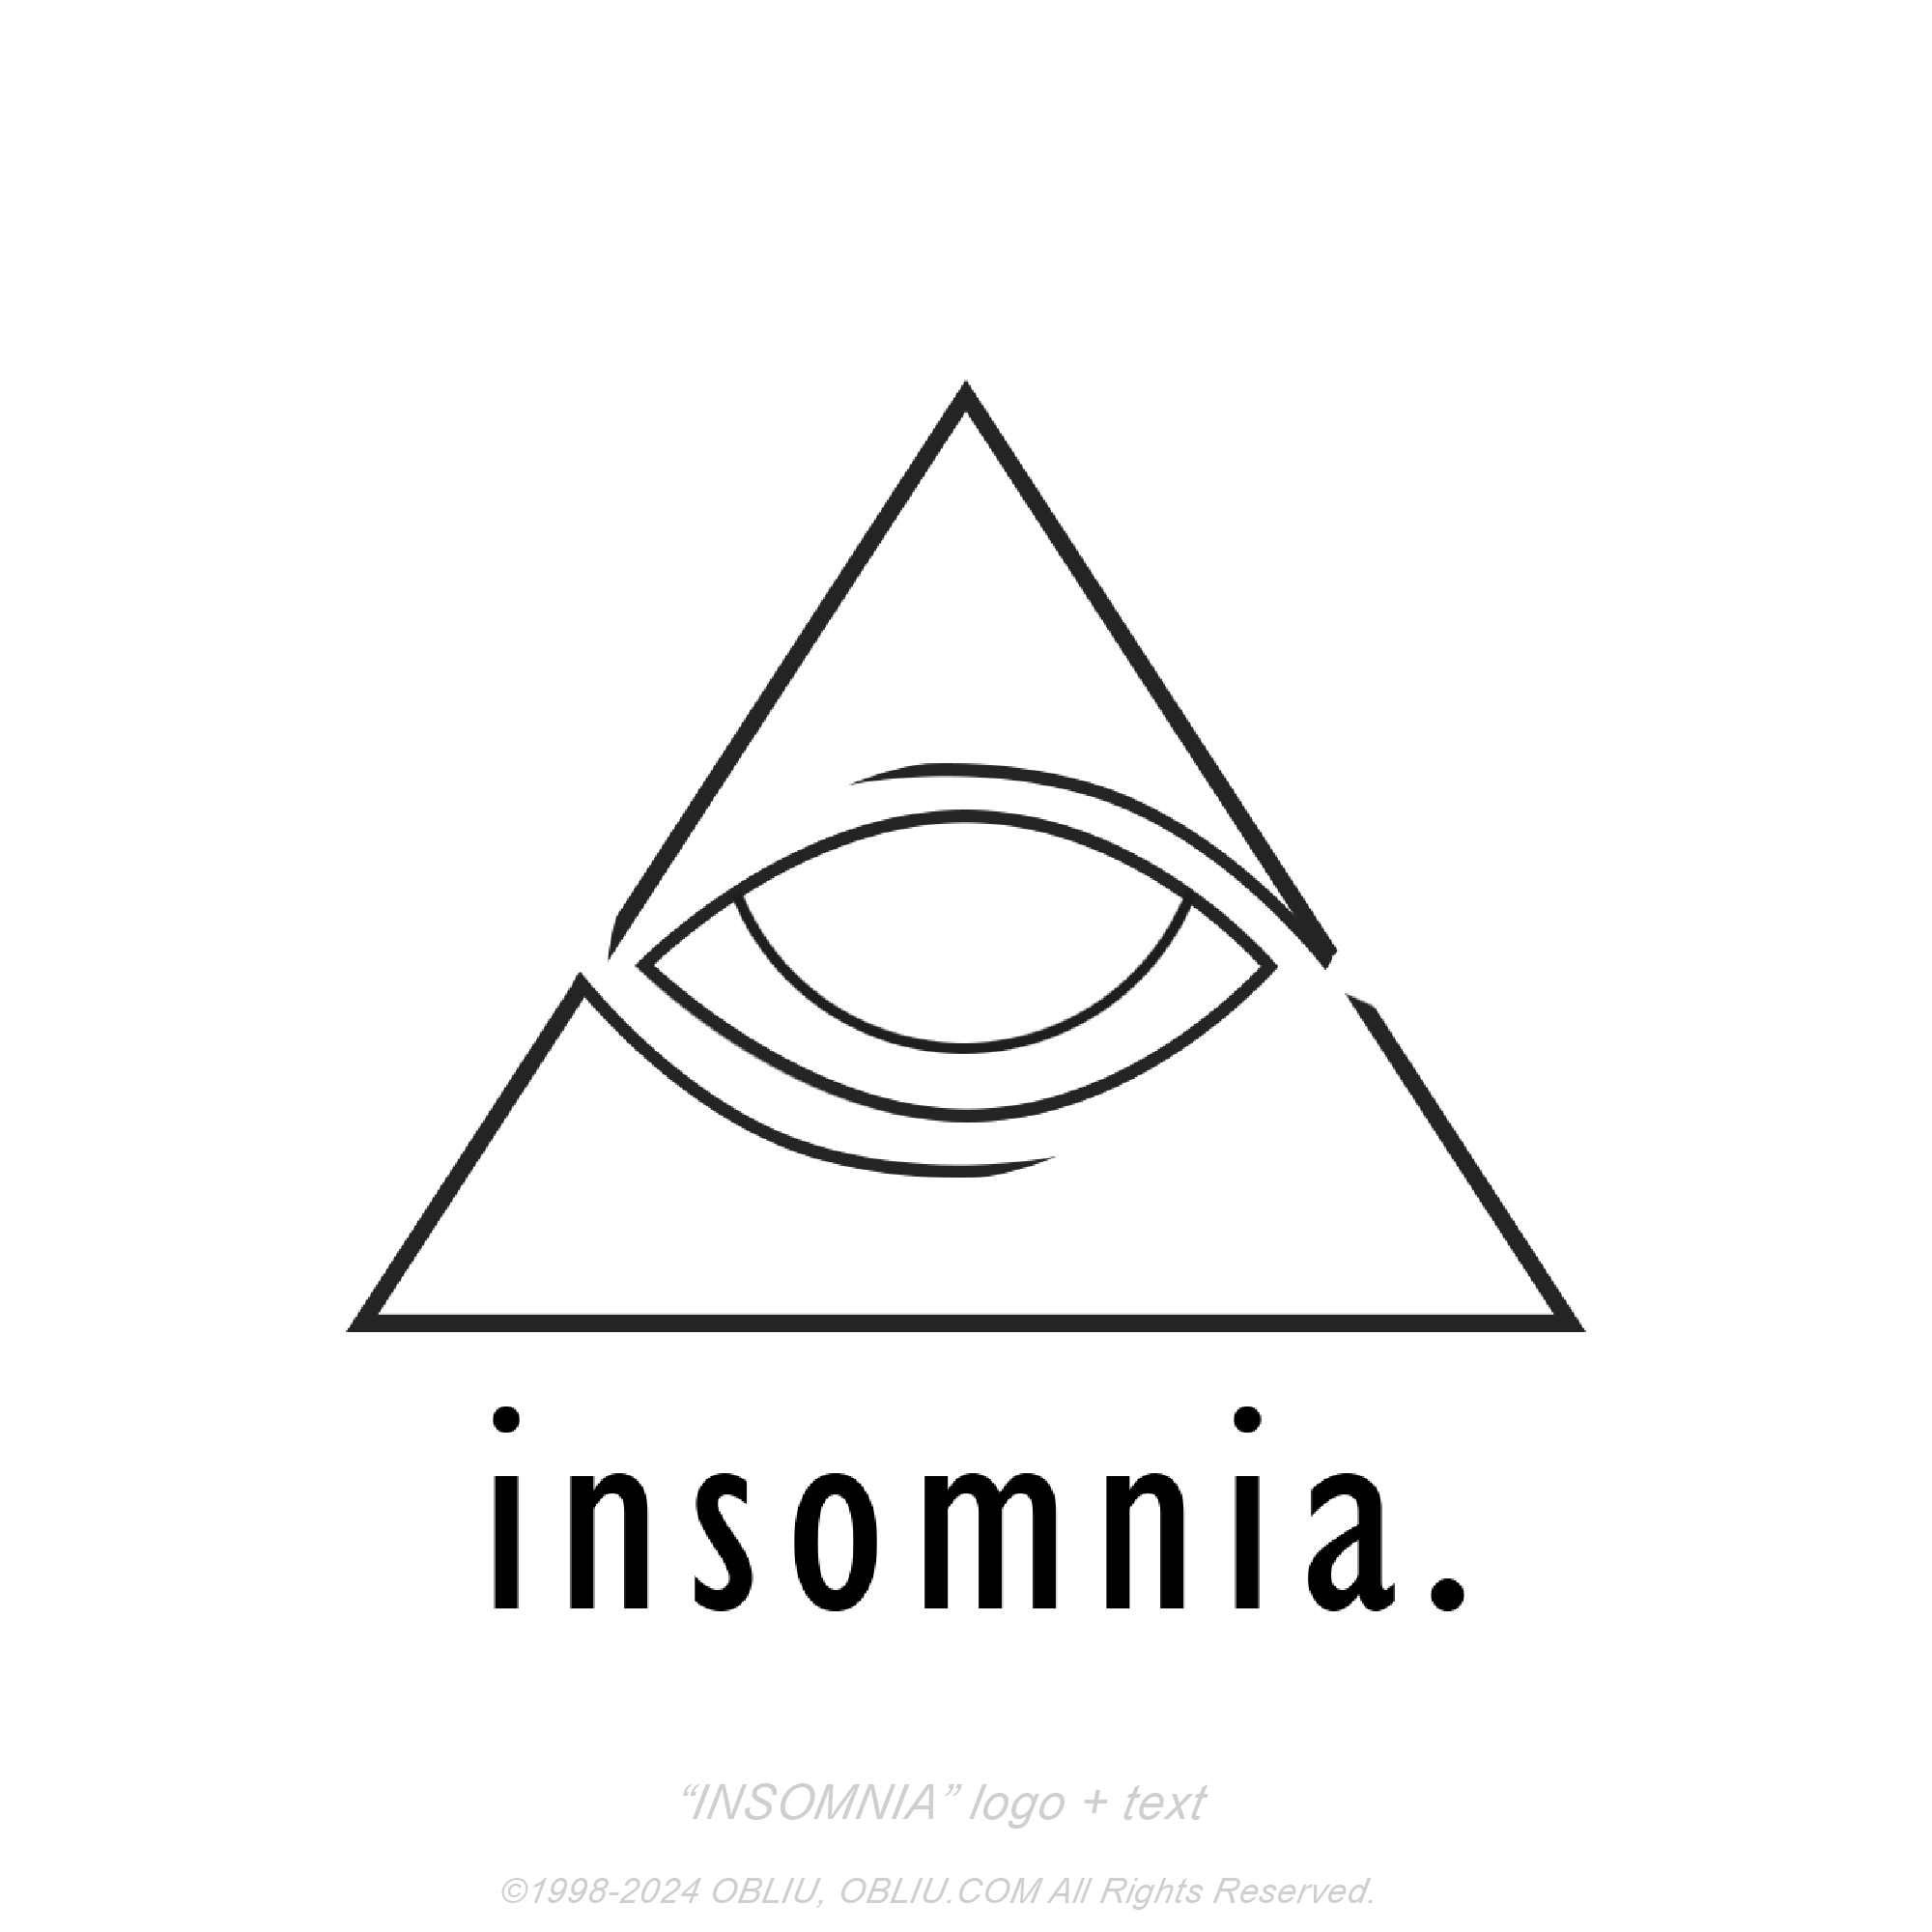 Insomnia + text (2014)